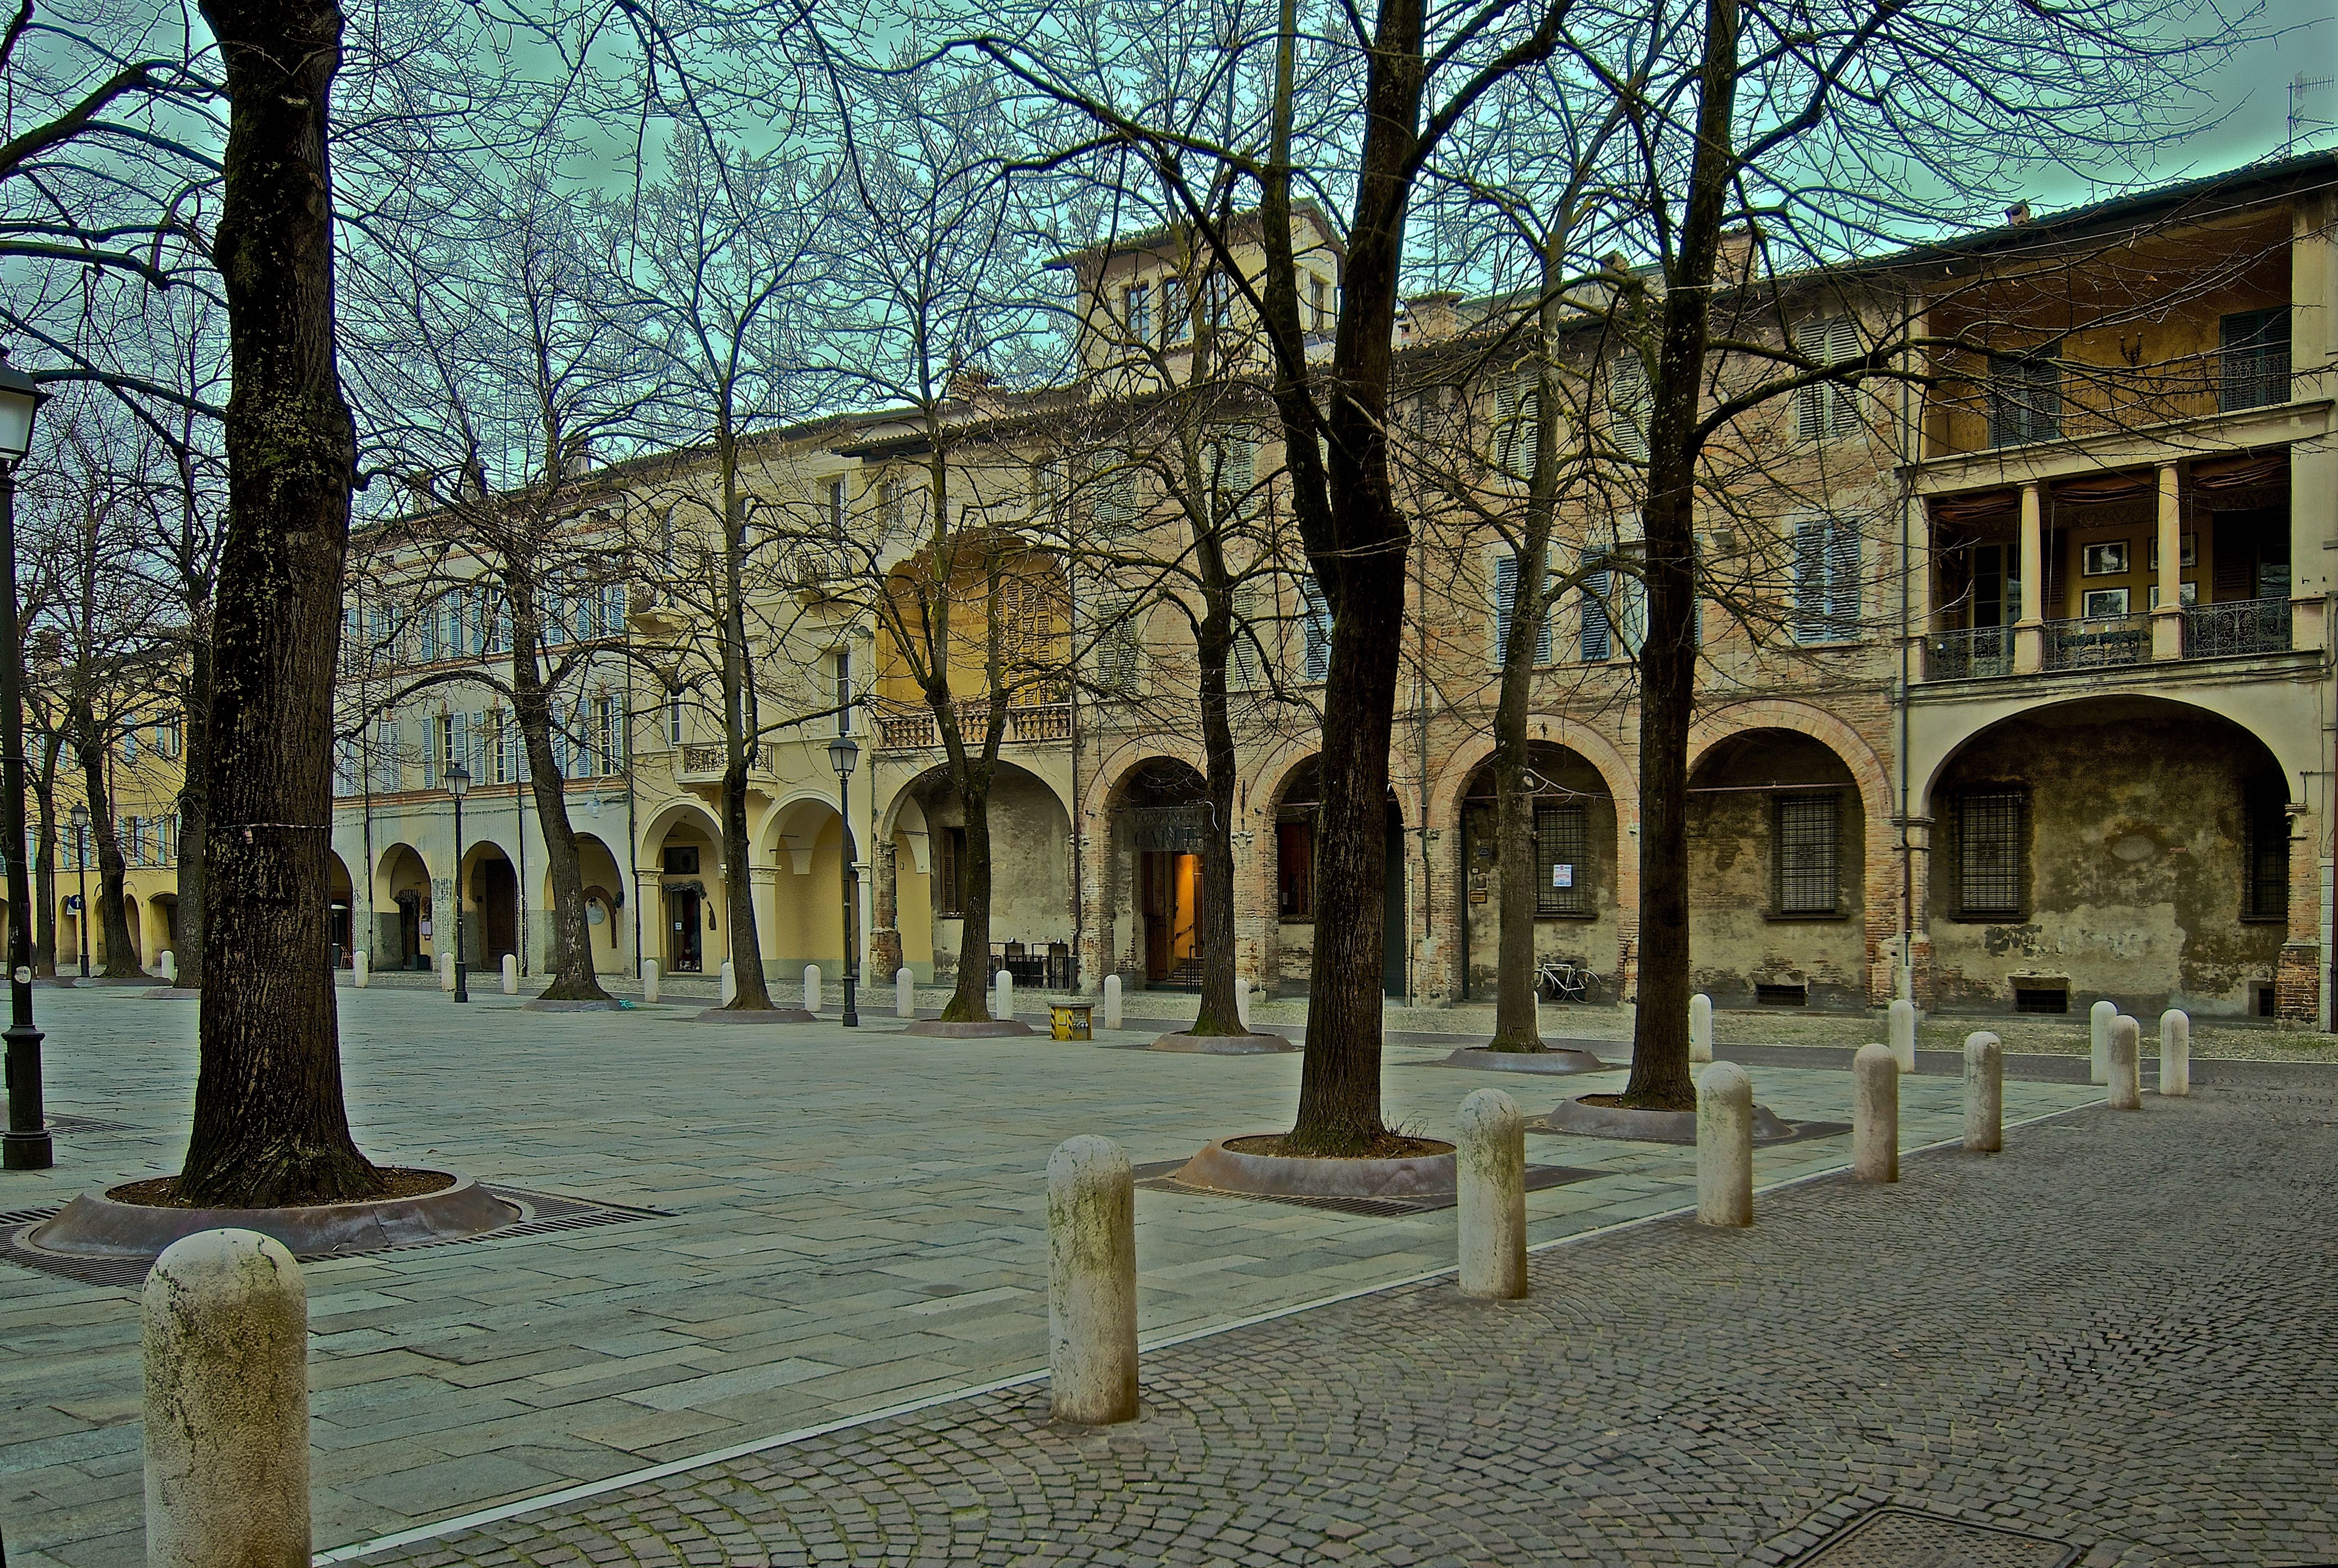 photo: https://upload.wikimedia.org/wikipedia/commons/d/d2/Piazza_Fontanesi.jpg